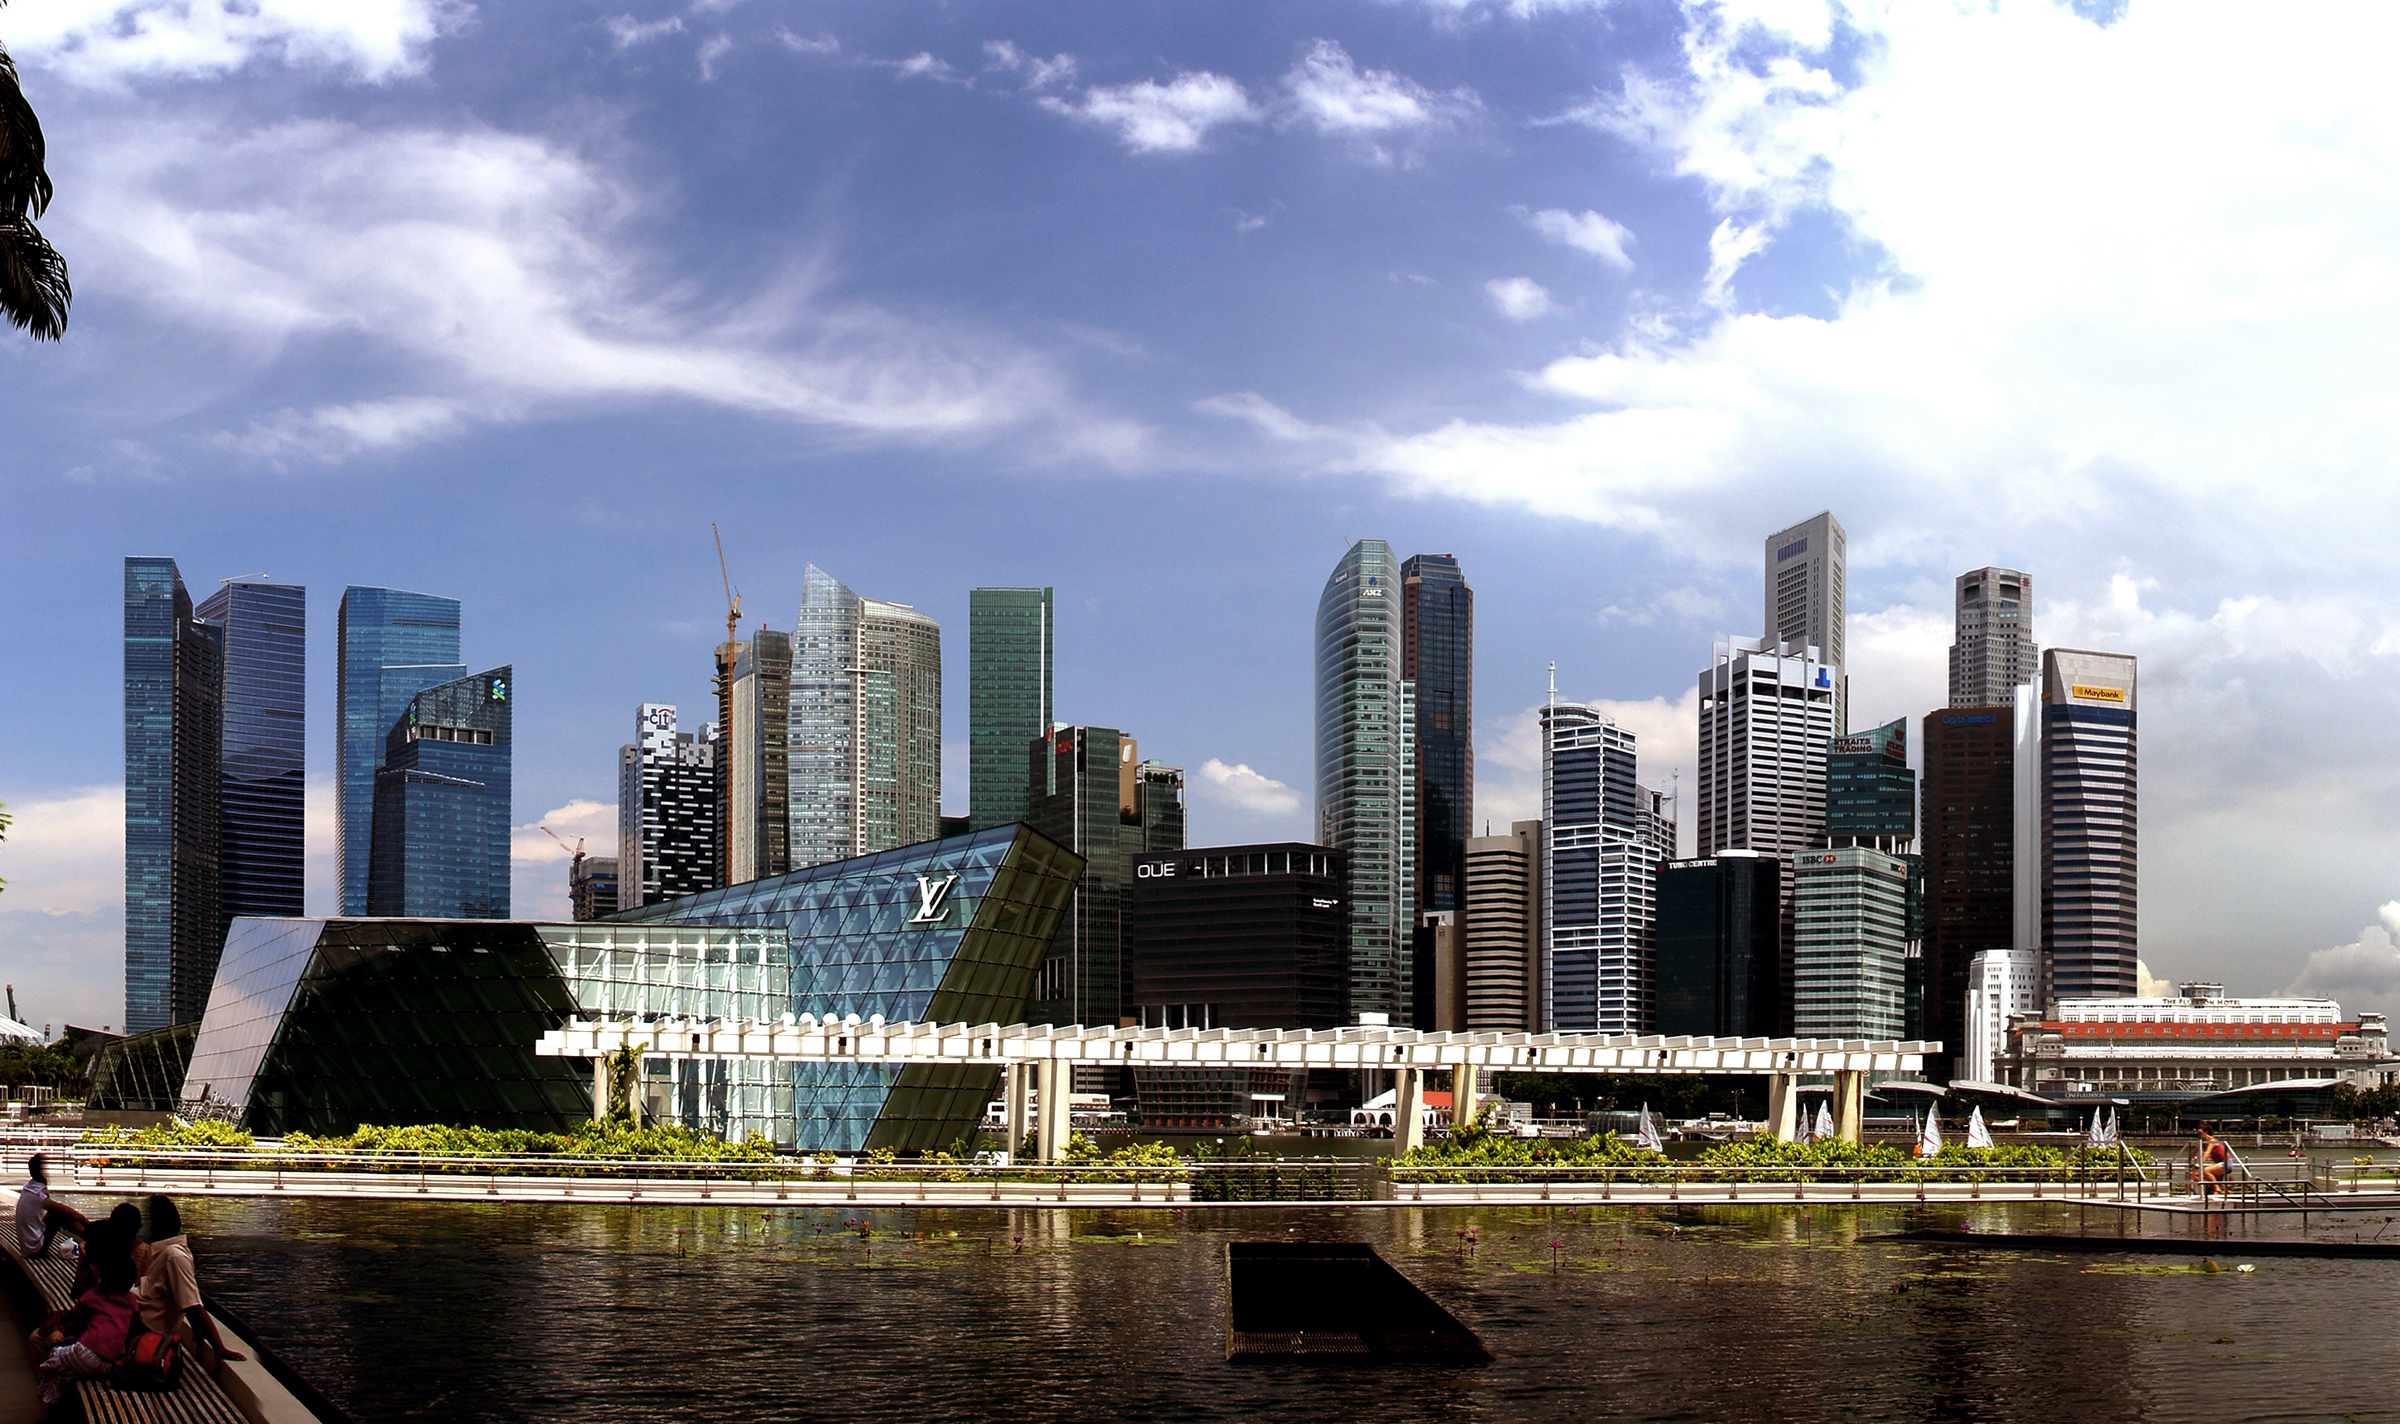 Singapore delays digital bank assessments as COVID-19 puts city under lockdown